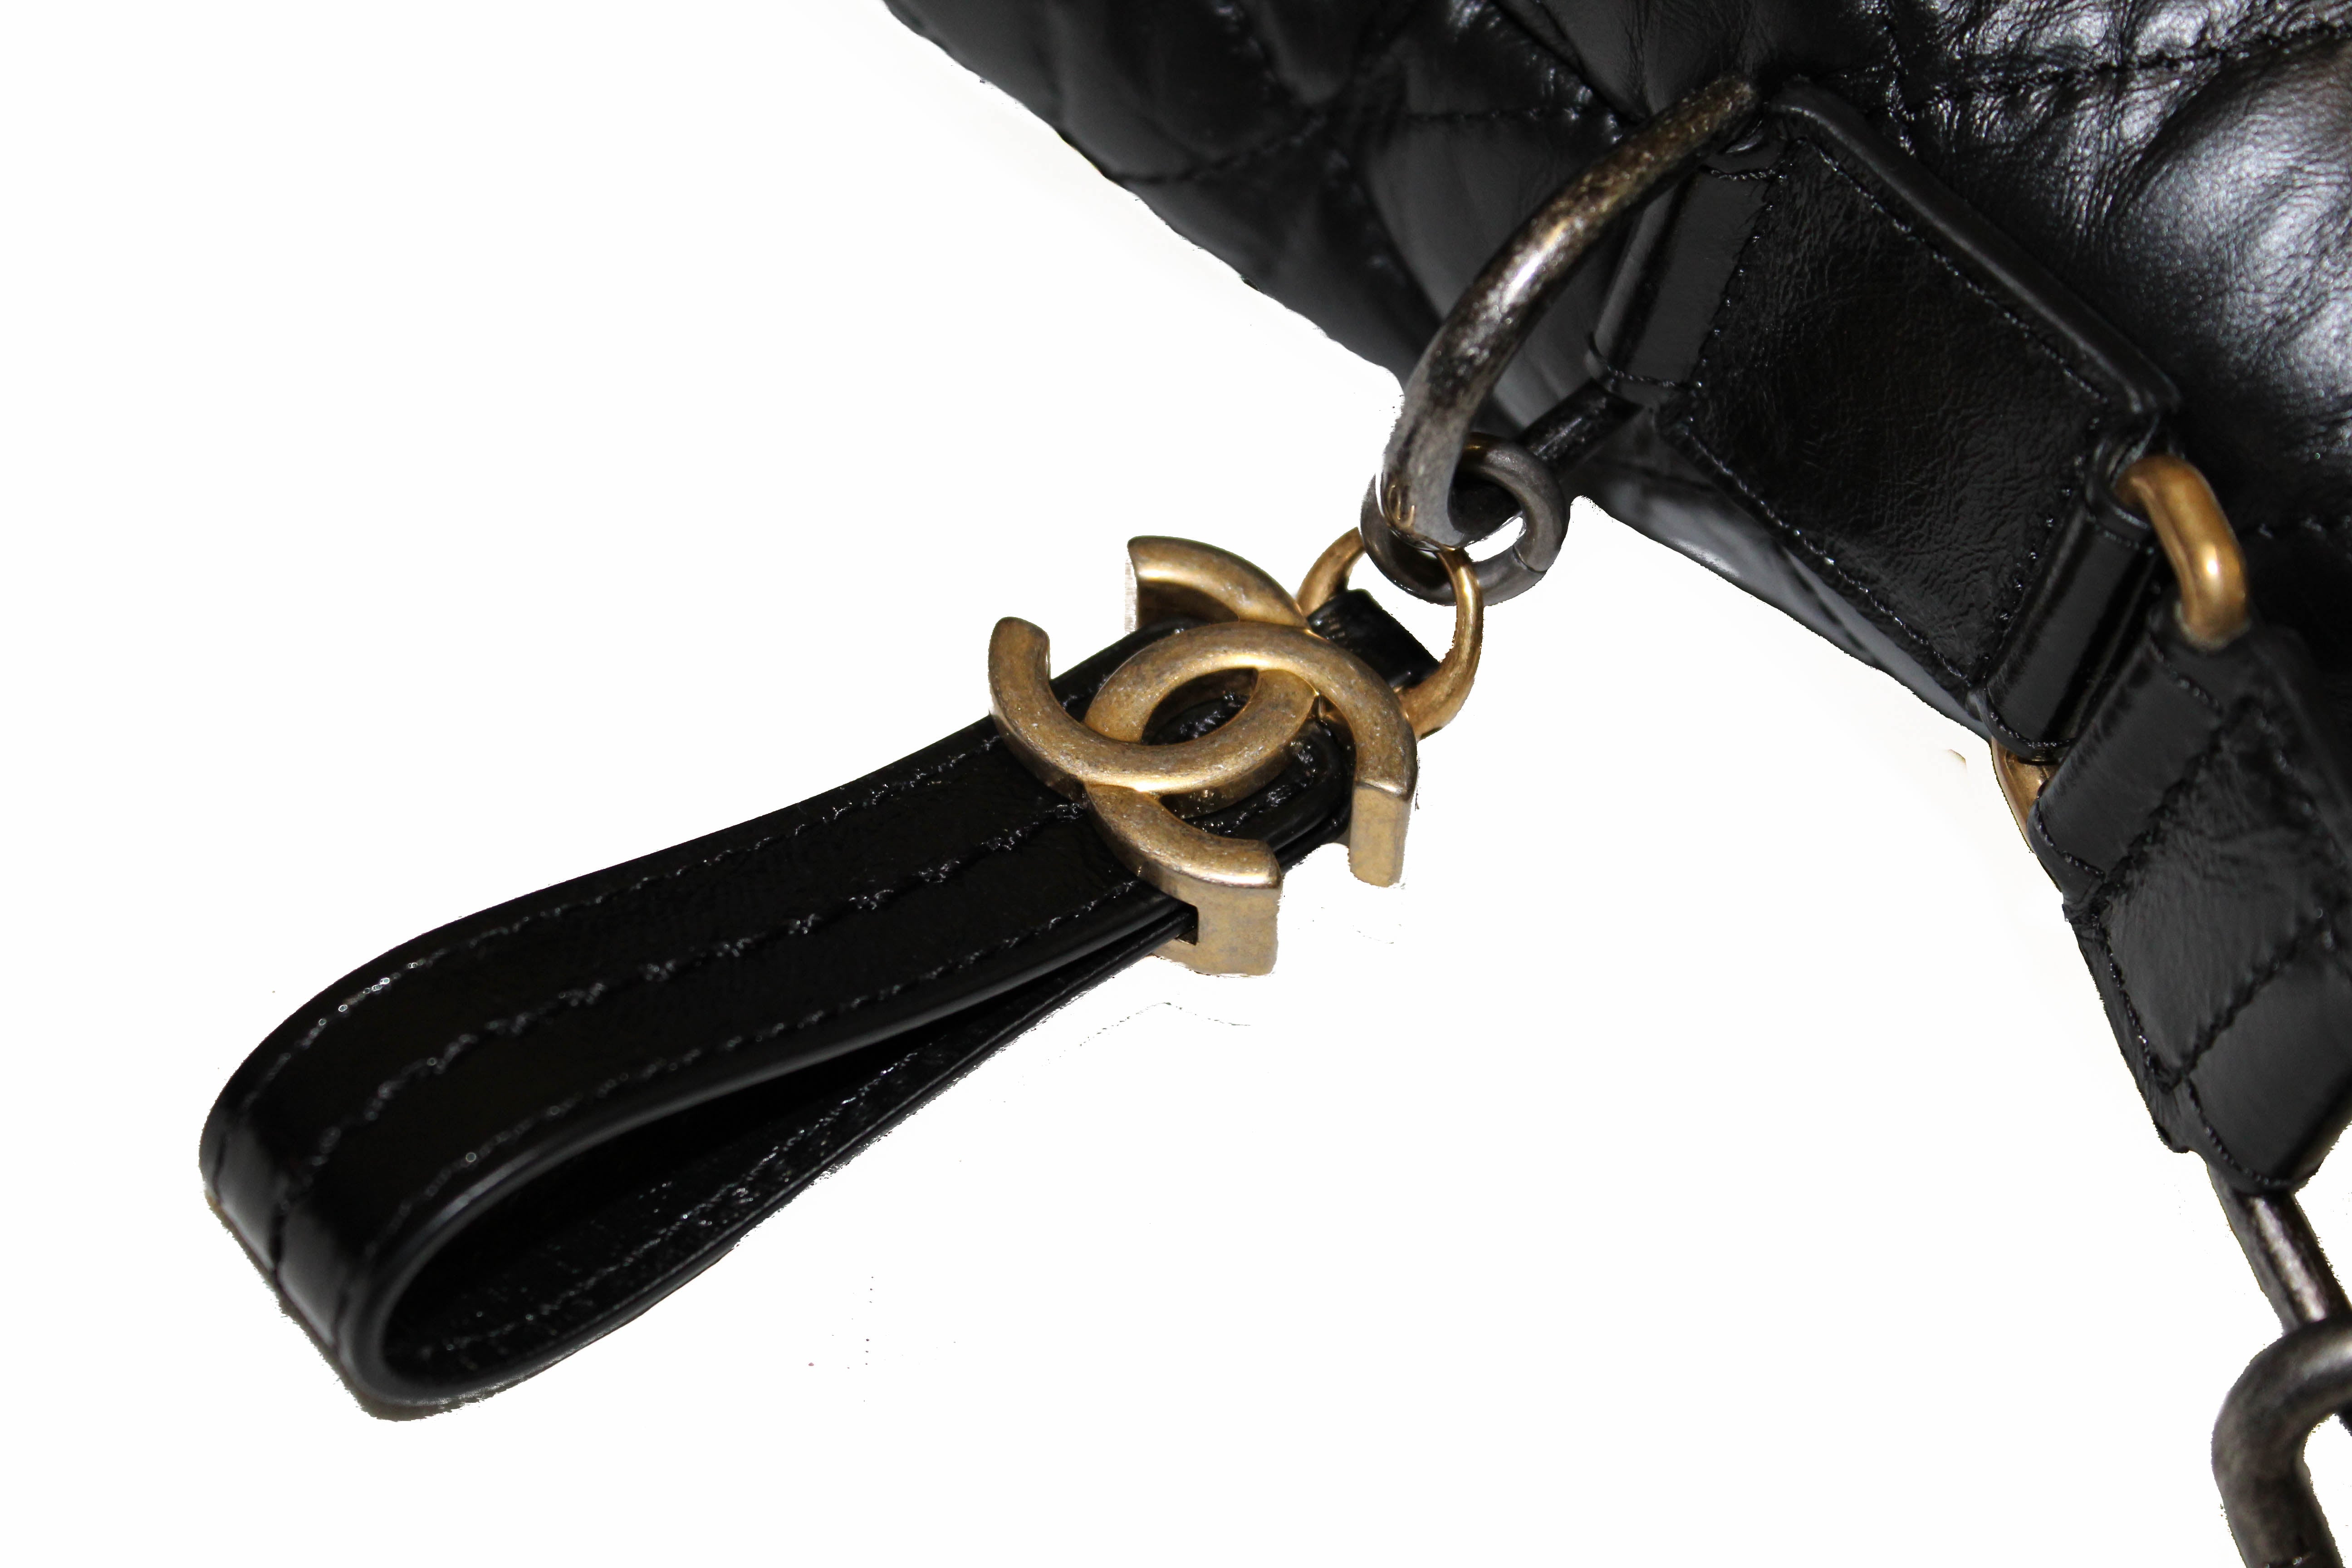 Authentic Chanel Gabrielle Dark Blue Double Zip Clutch Chain Aged Crossbody  Bag